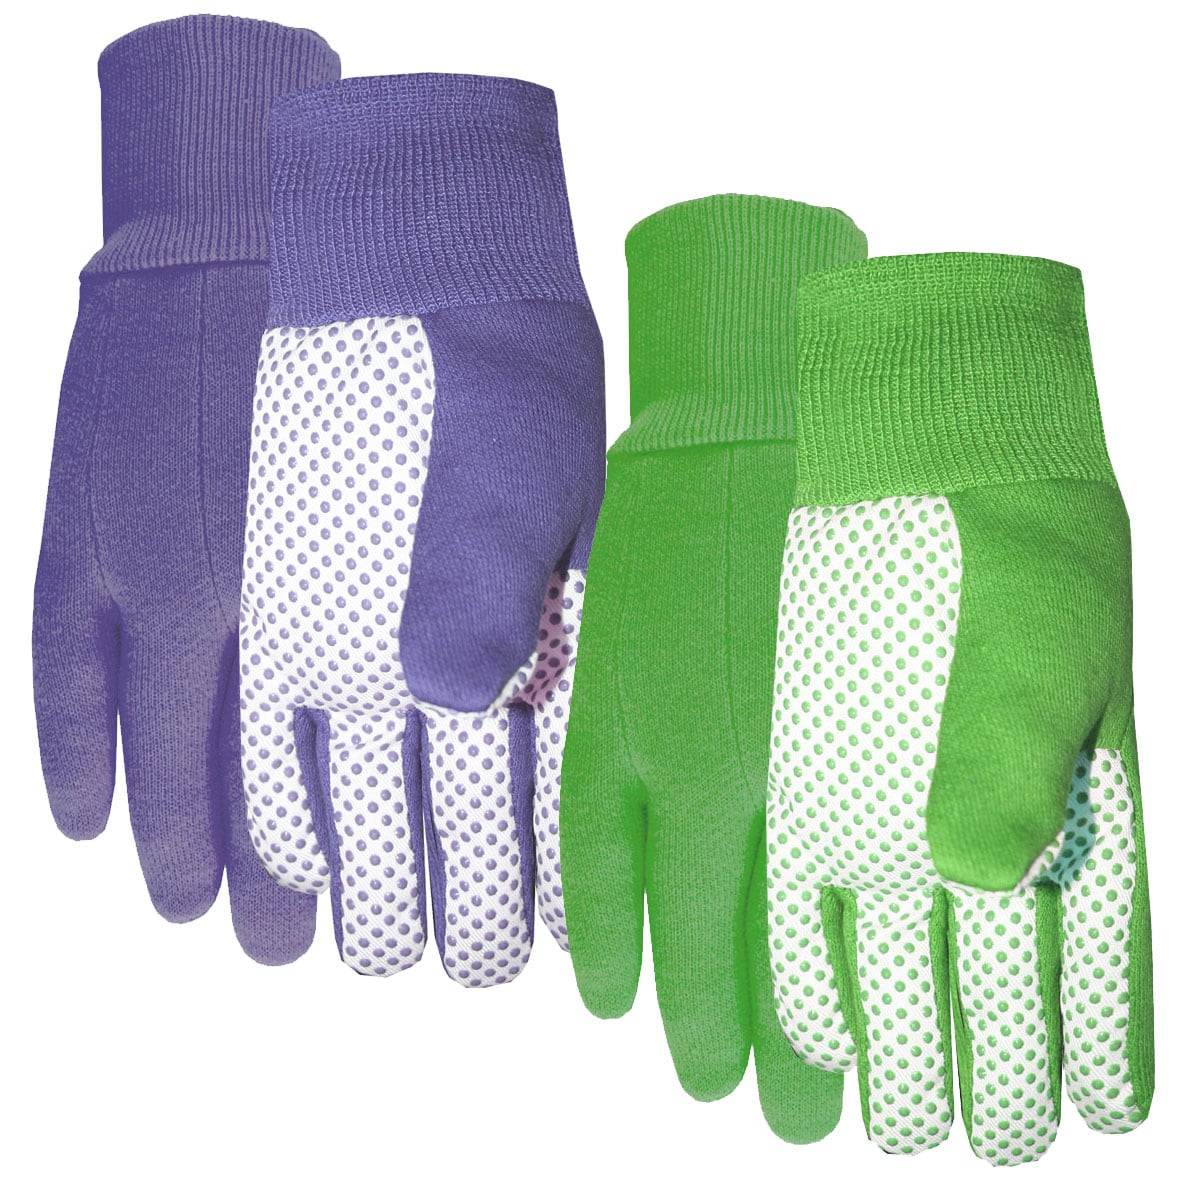 FIRM GRIP General Purpose Landscape Women's Medium Glove (1-Pair